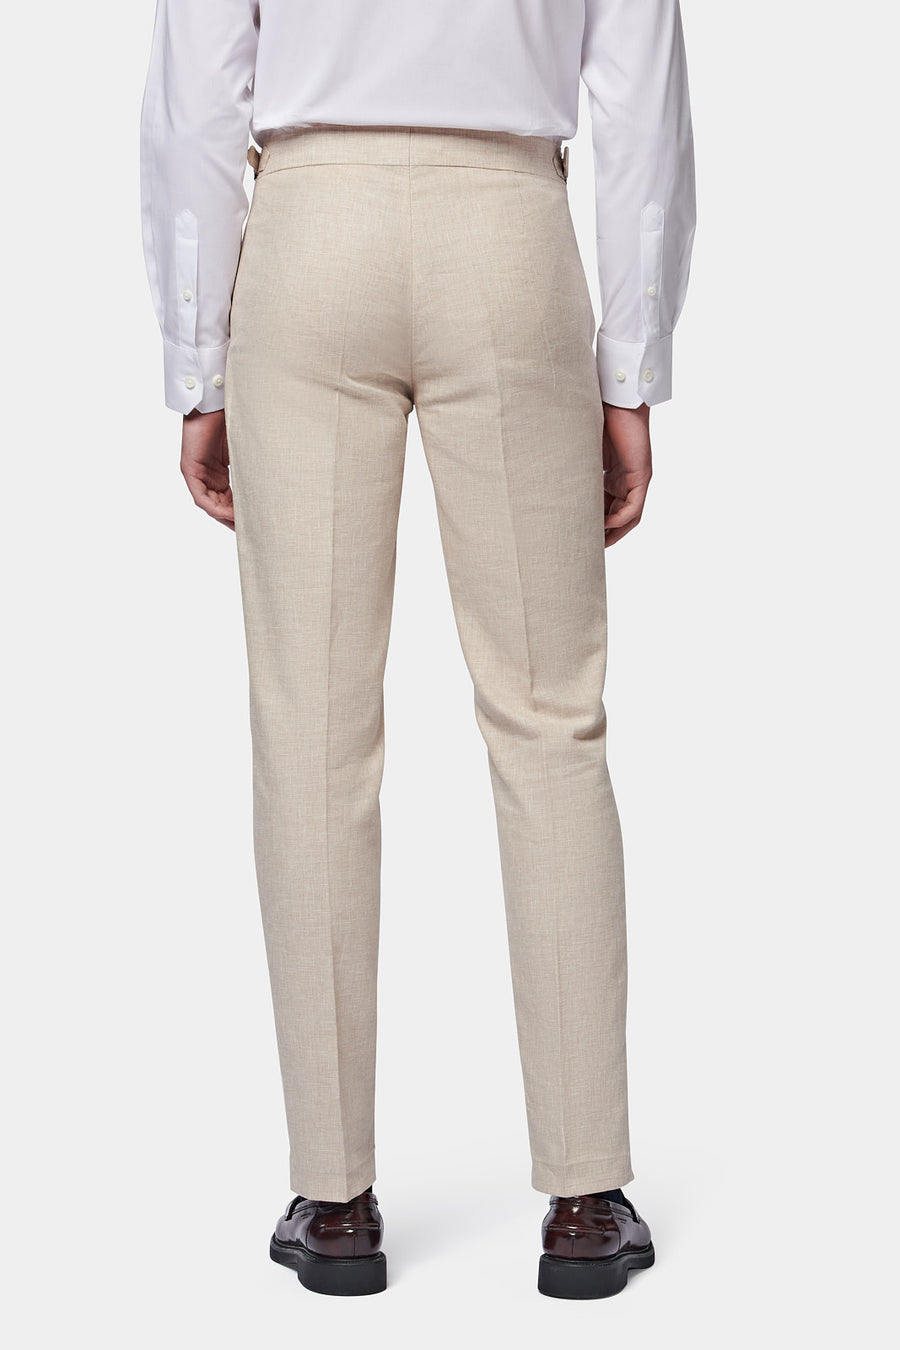 Linen Blend Classic Three Piece Suit in Egret